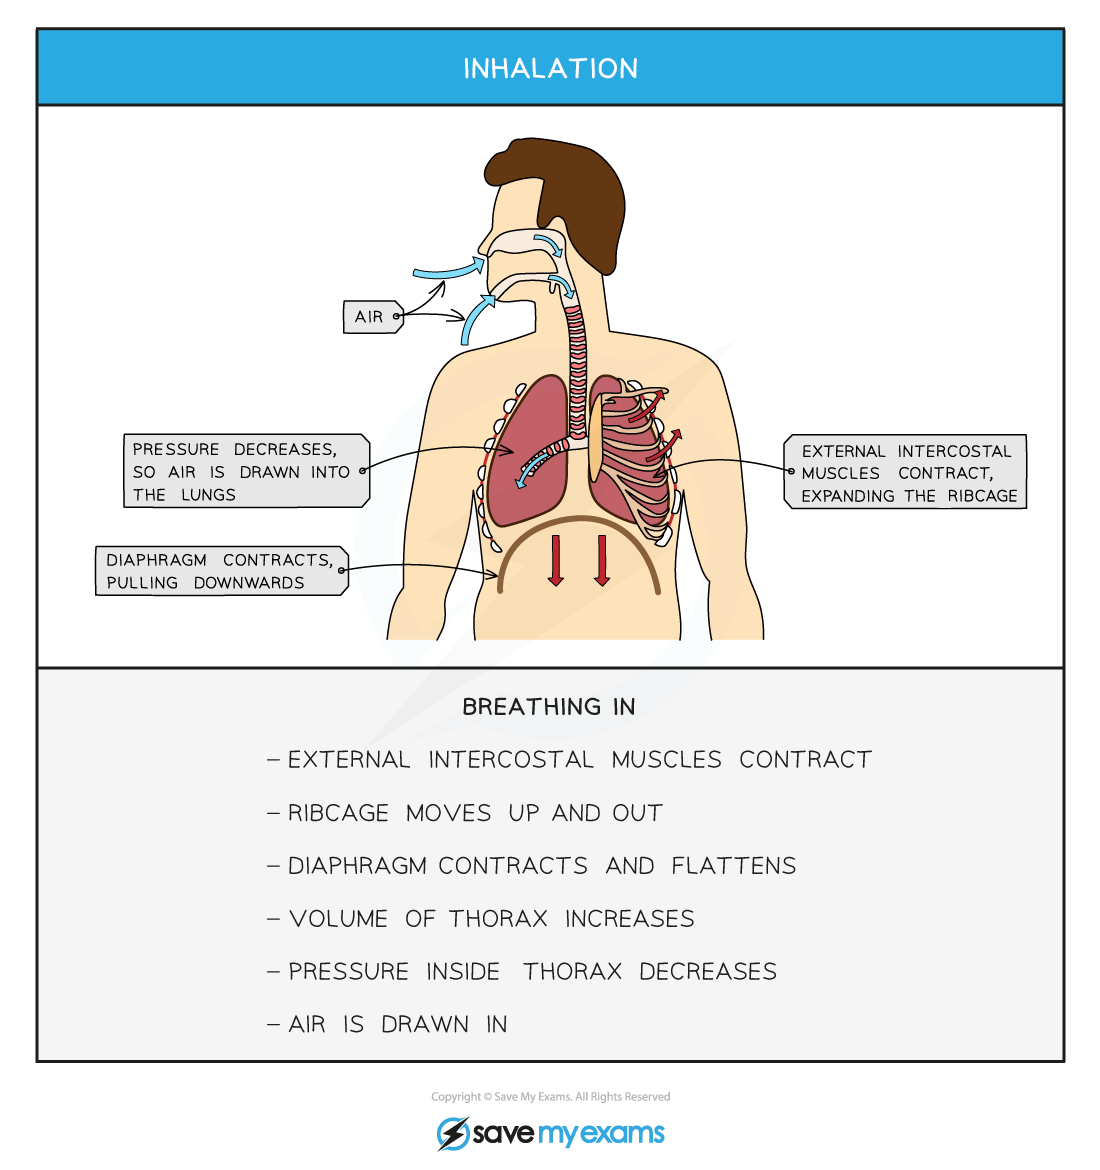 Inhalation-1